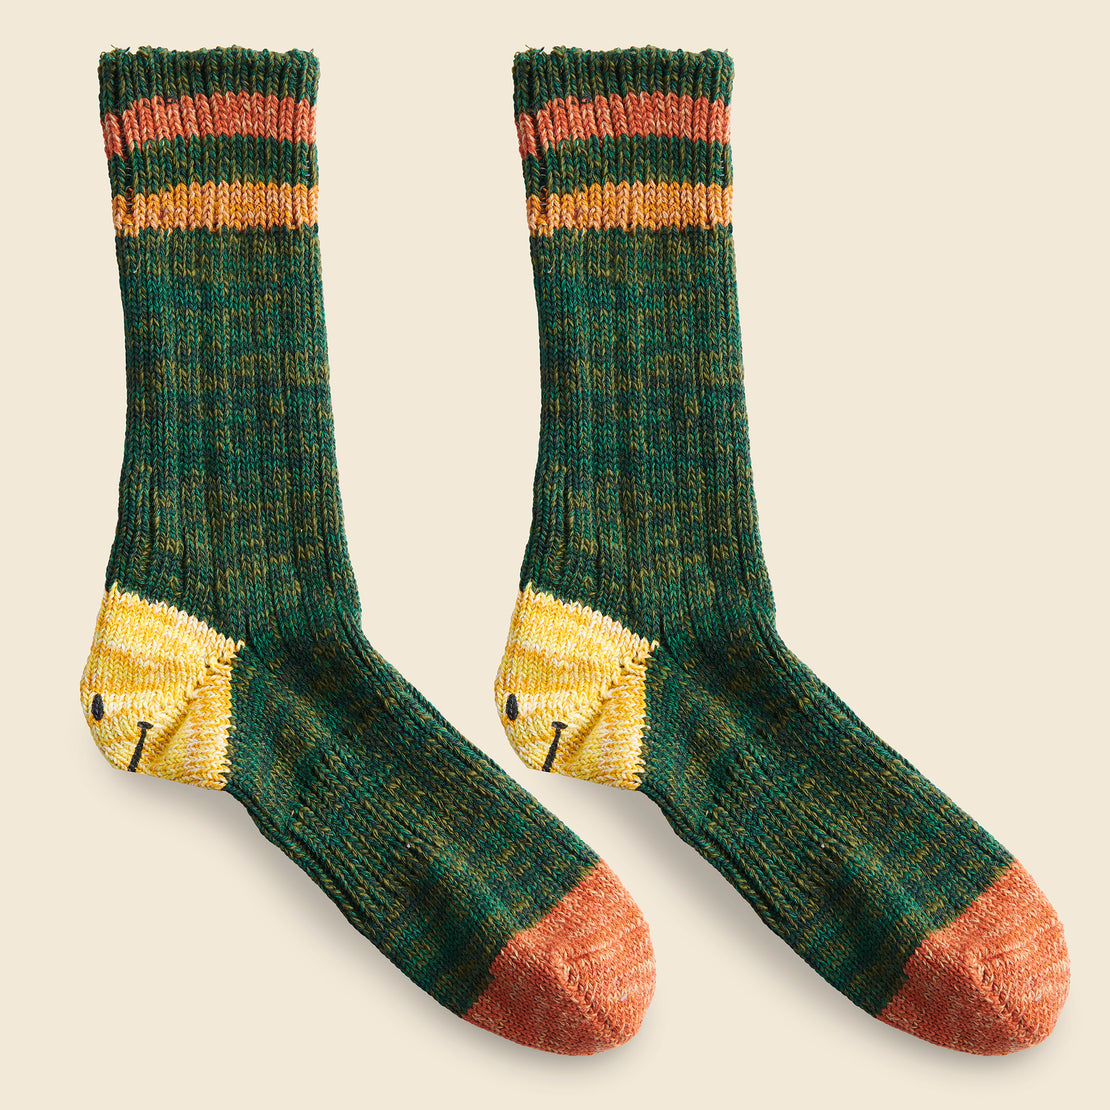 60 Yarns Grandrelle Ivy Smilie Heel Socks - Green